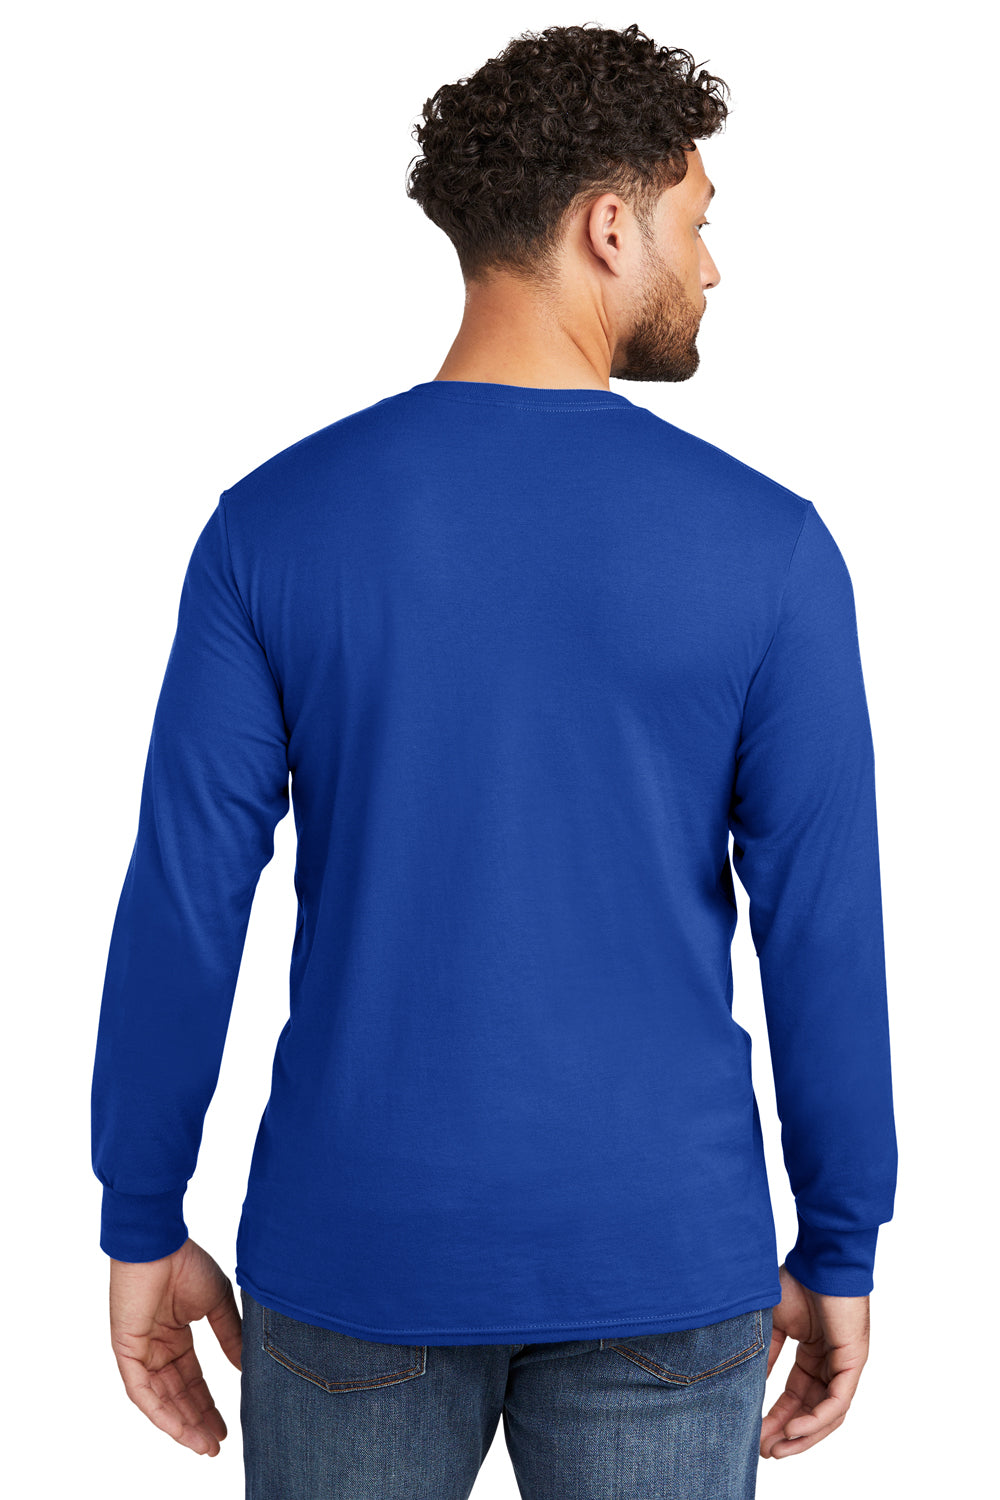 Jerzees 560LS Mens Premium Blend Ring Spun Long Sleeve Crewneck T-Shirt Royal Blue Back